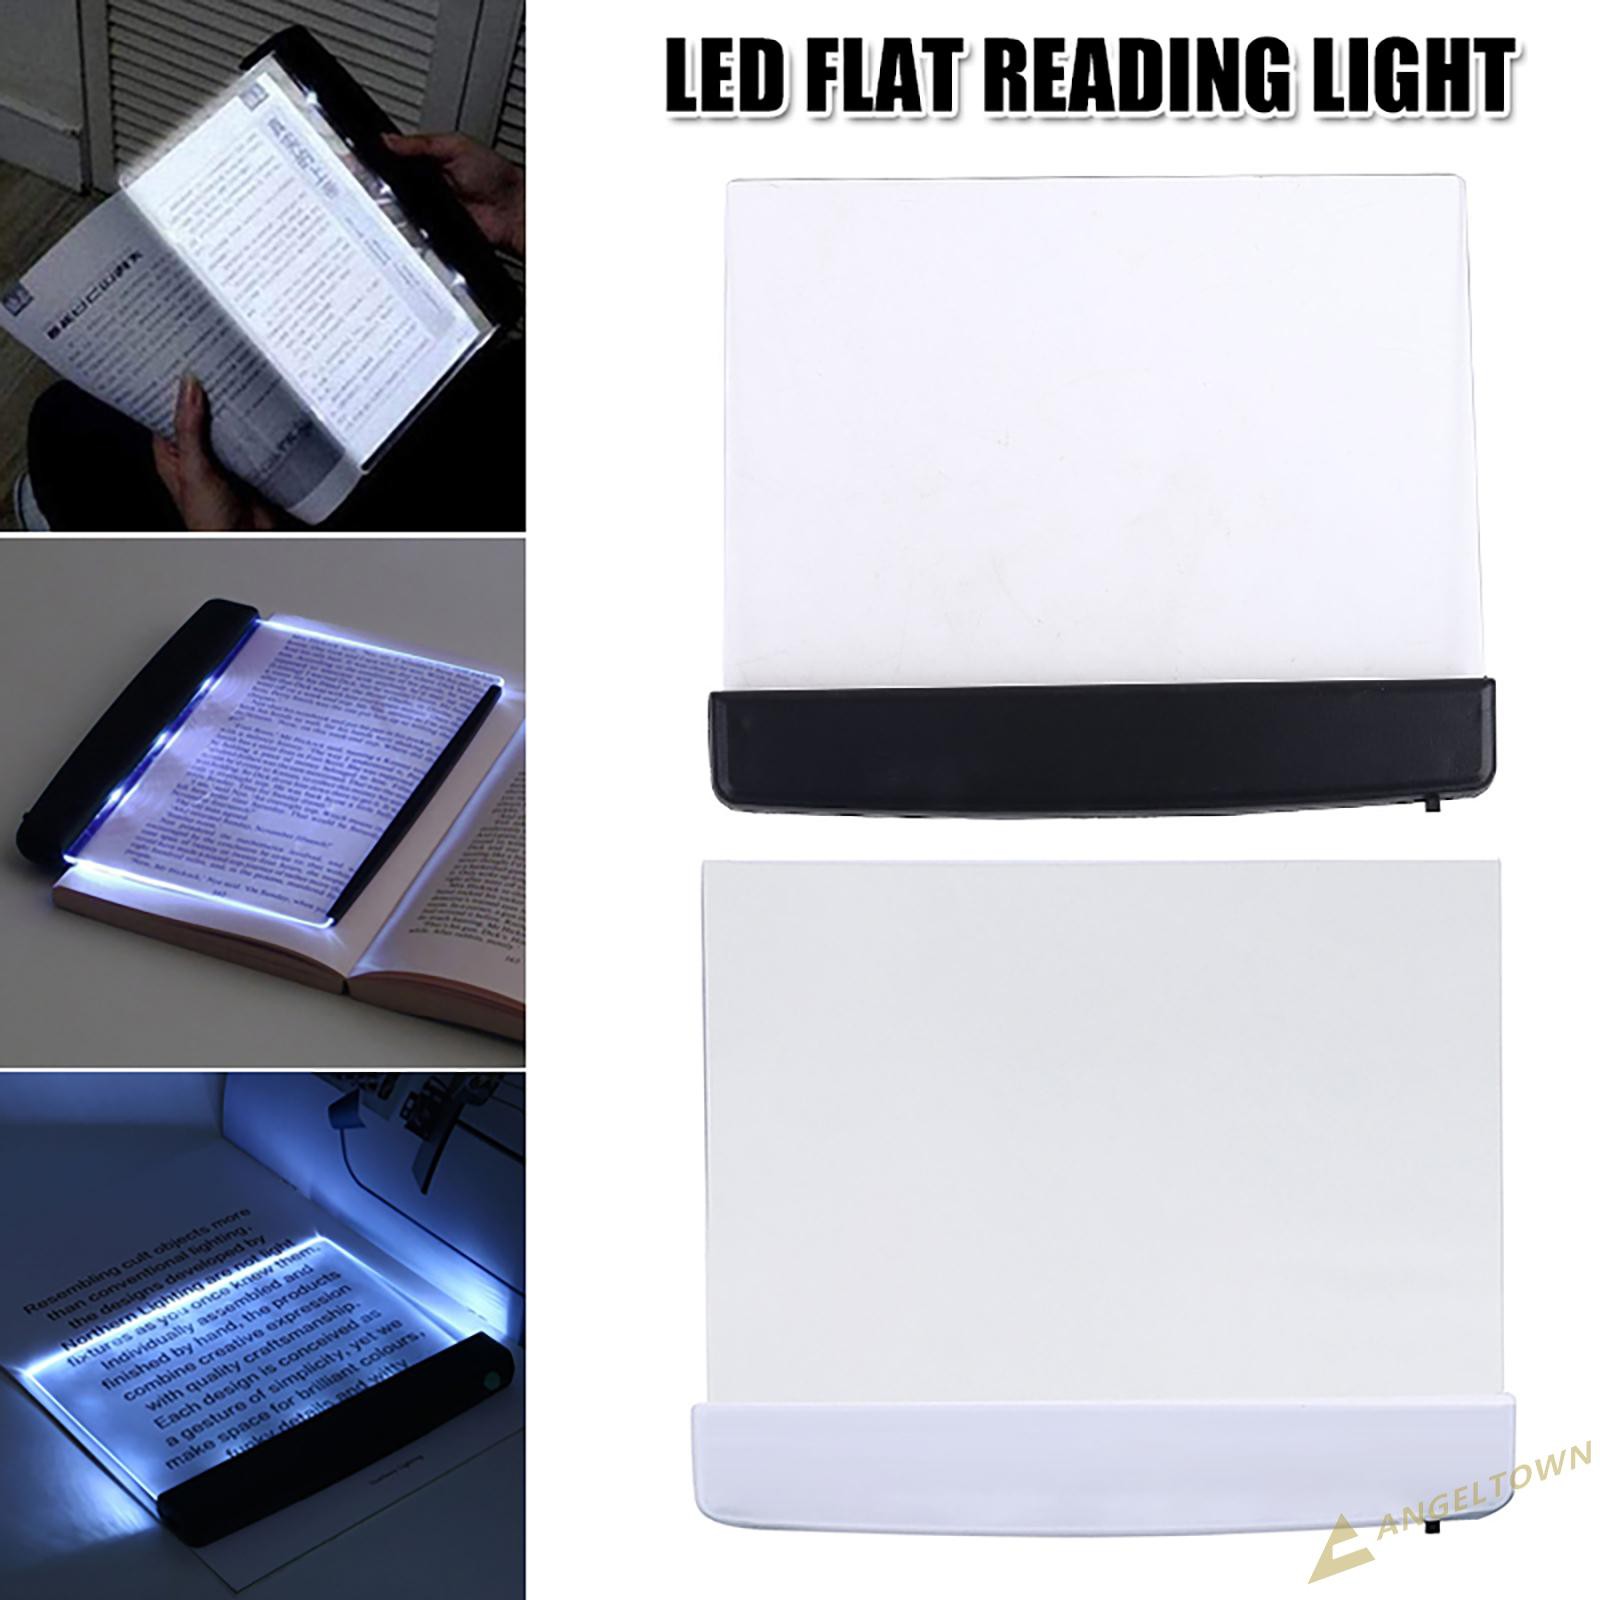 Flat Panel Reading Lamp, Eye Care LED Night Vision Book Reading Night Light